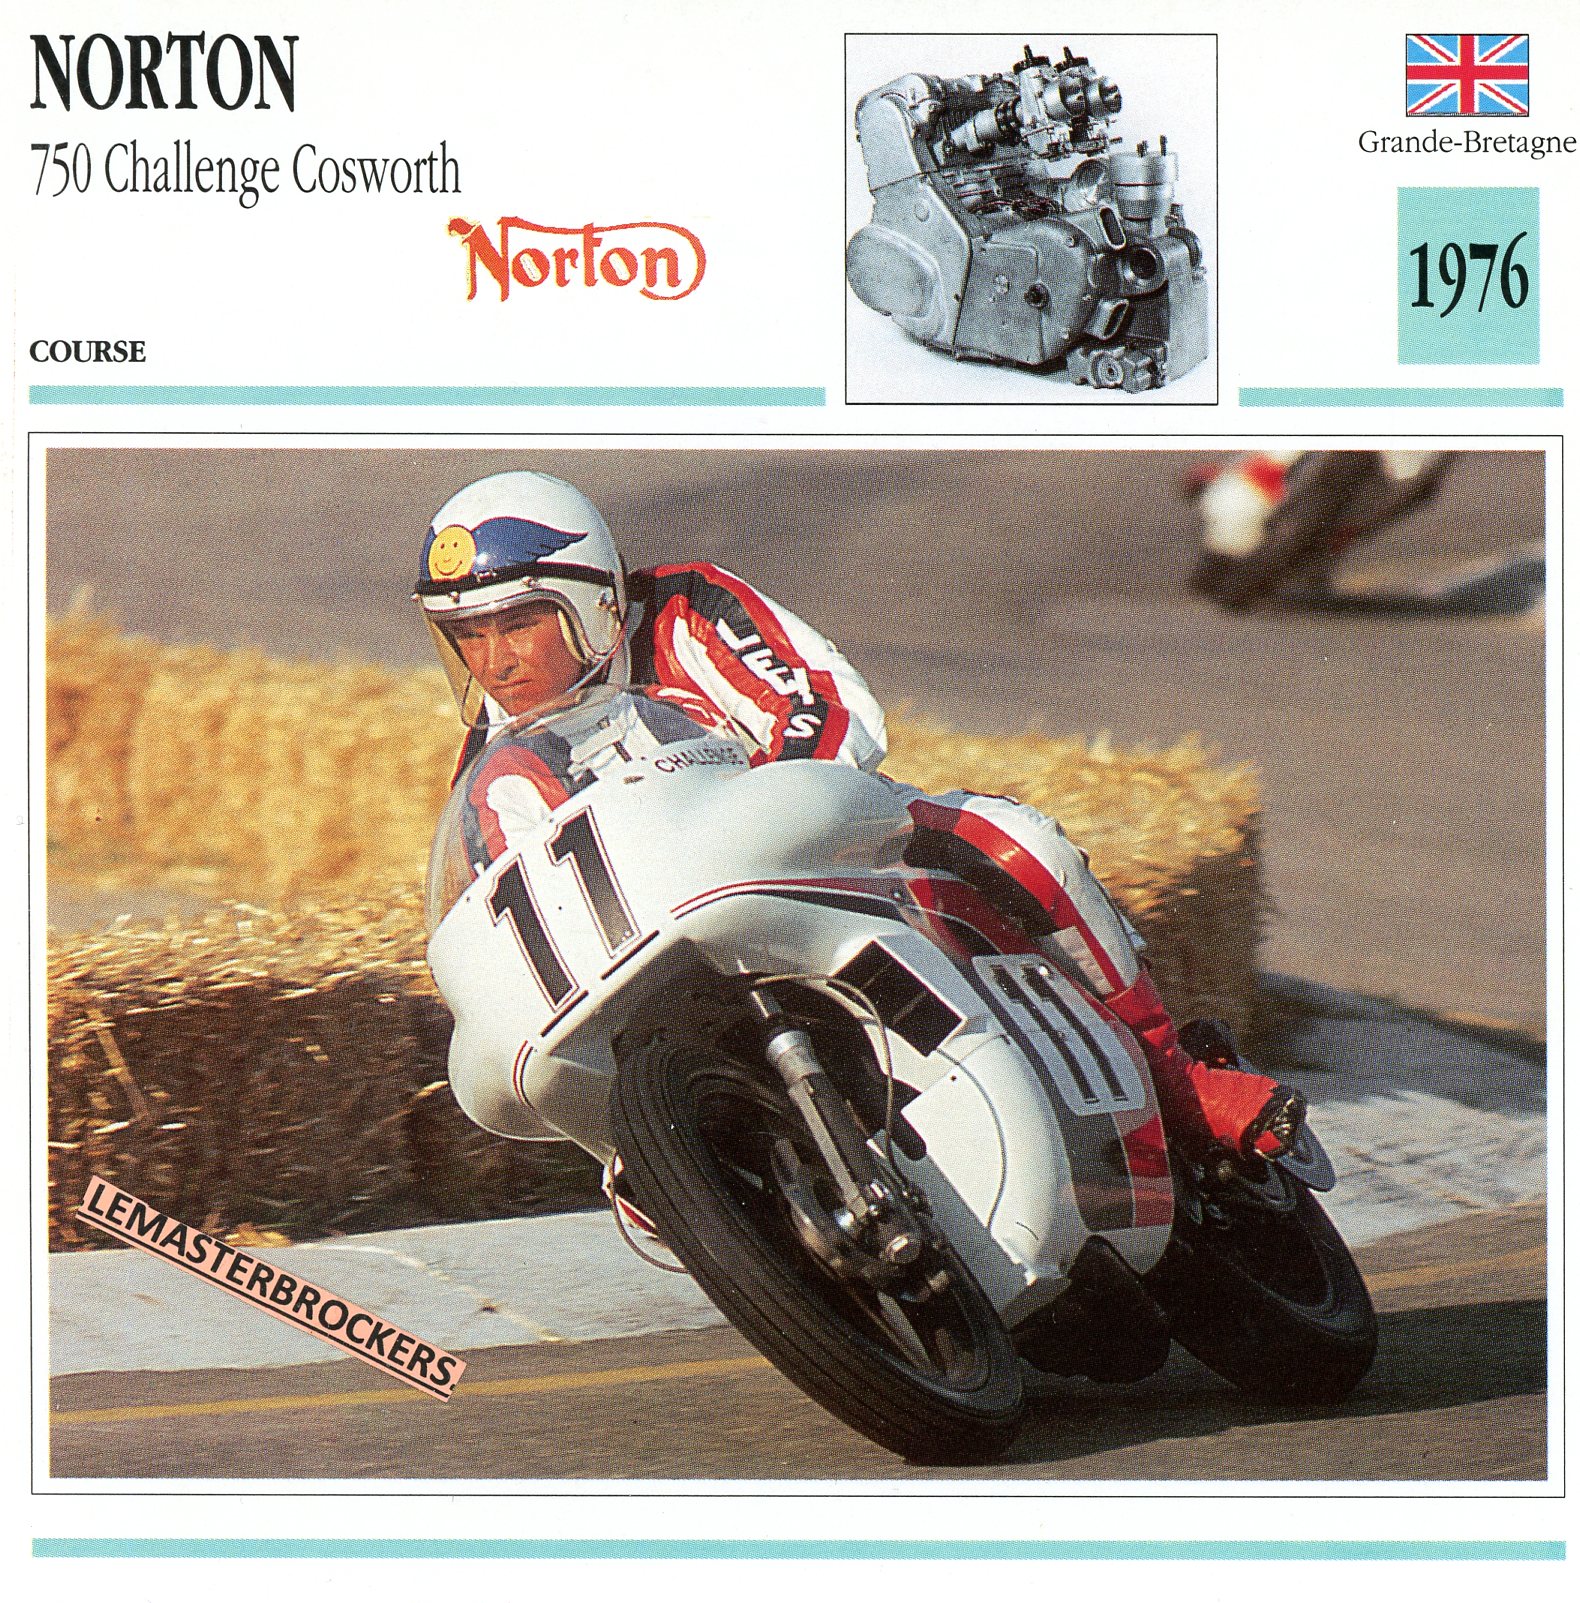 NORTON-750-CHALLENGE-COSWORTH-1976-FICHE-MOTO-ATLAS-lemasterbrockers-CARD-MOTORCYCLE